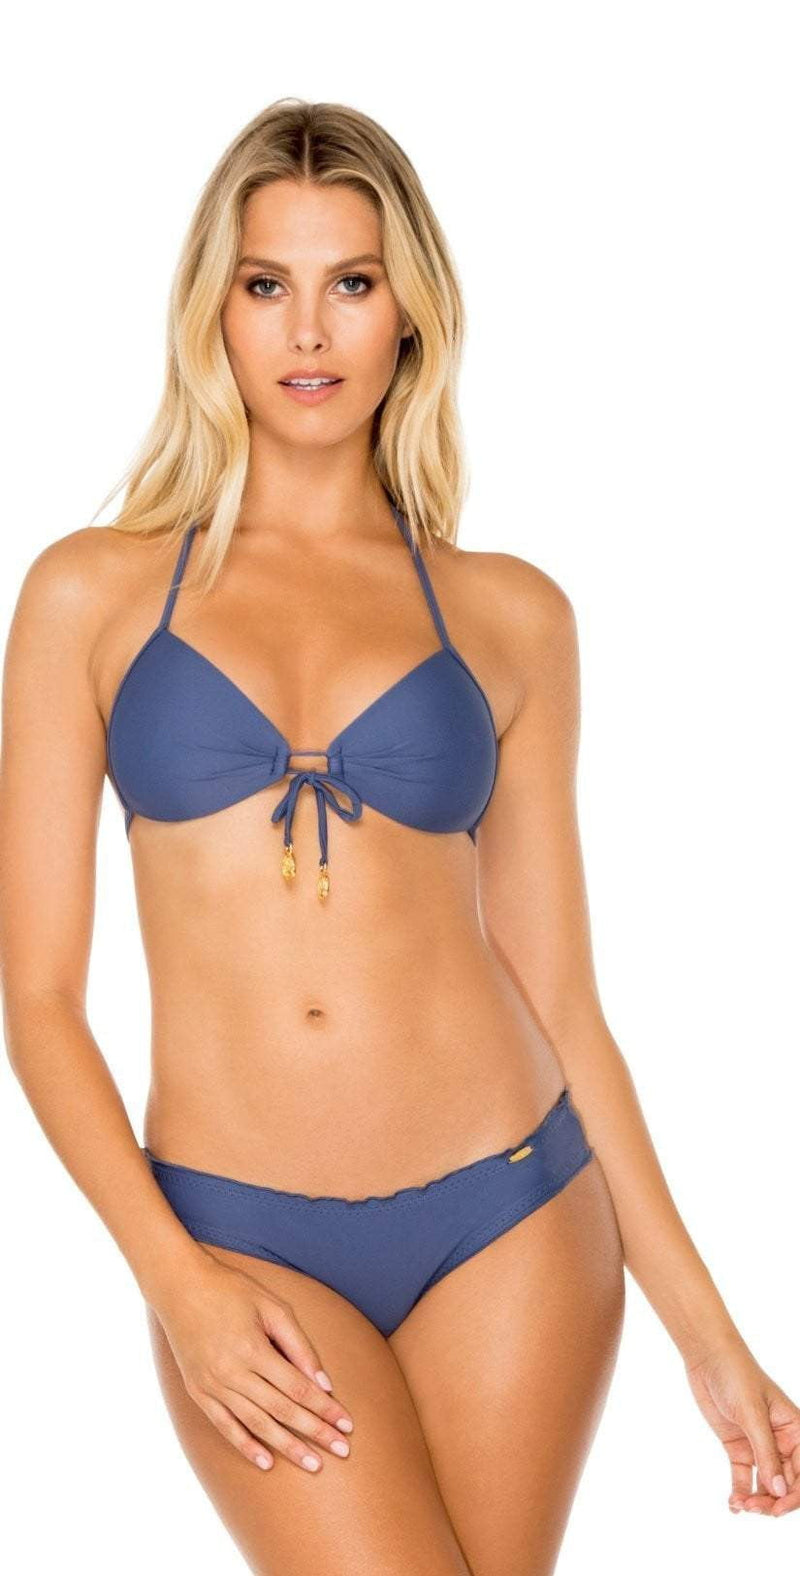 South Beach Swimsuits Luli Fama Cosita Buena Molded Push Up Bandeau Bikini  Top in Azul – South Beach Swimsuits